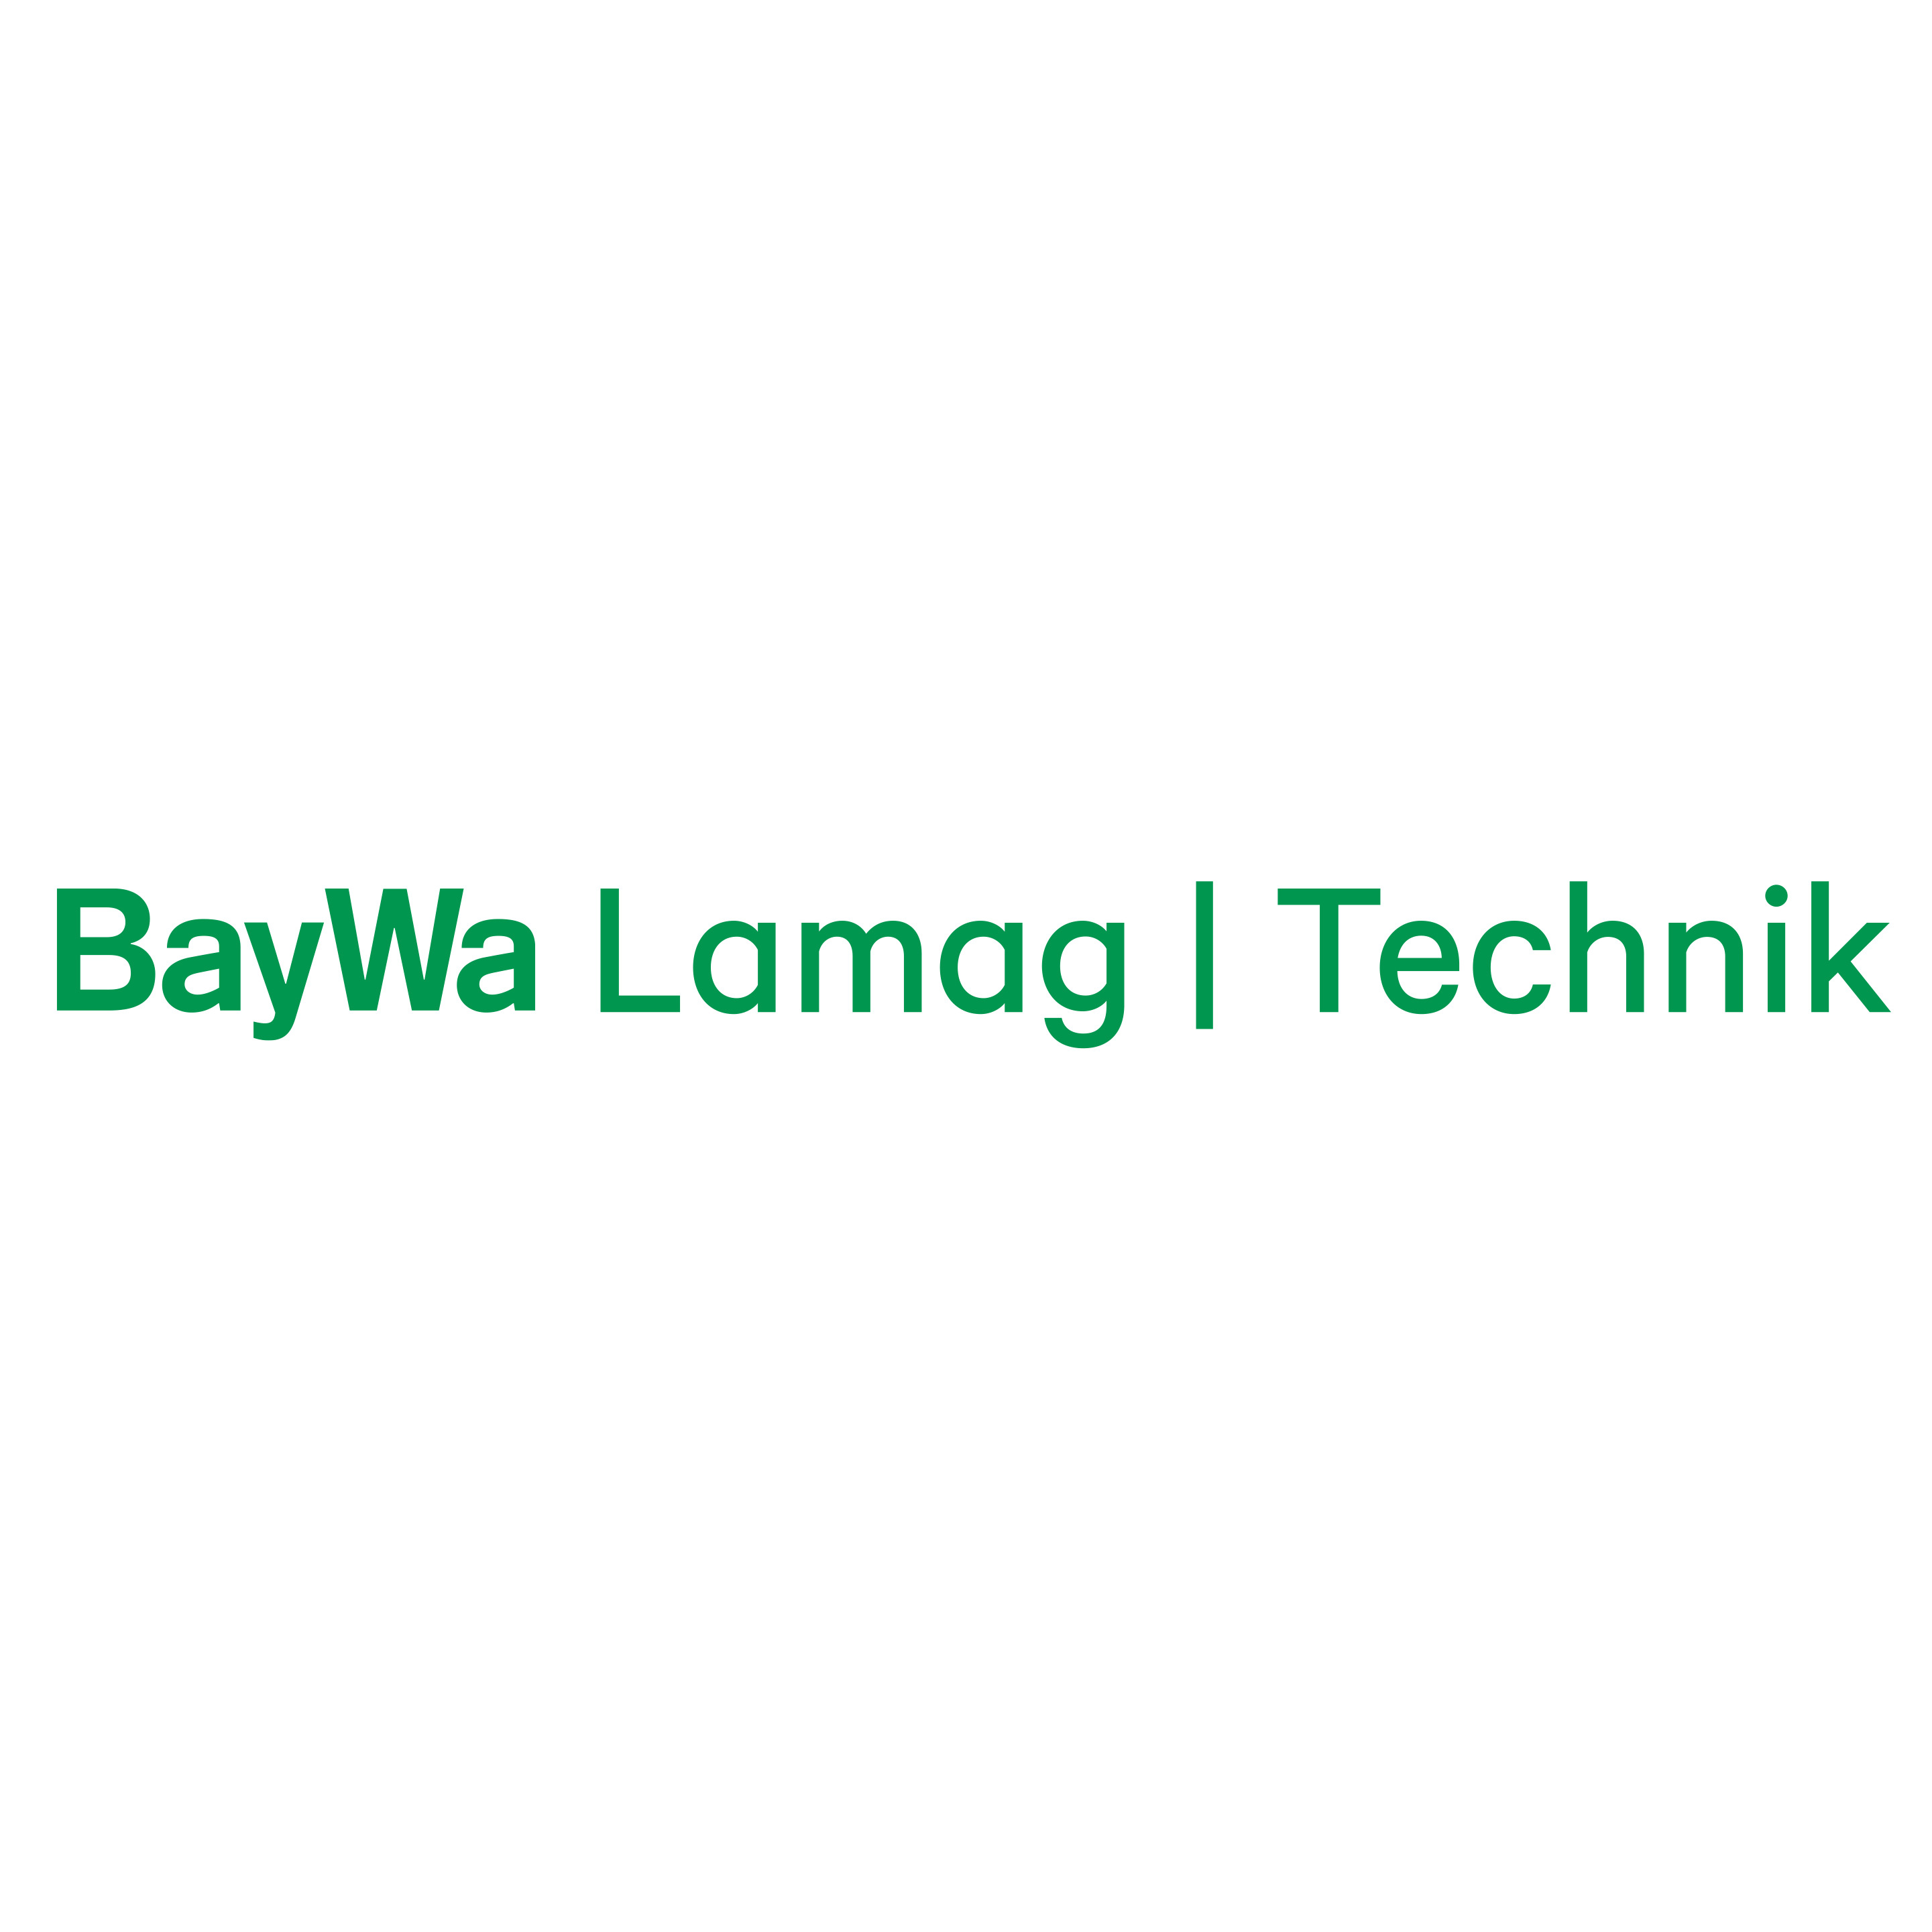 BayWaLamag Technik in 6890 Lustenau Logo